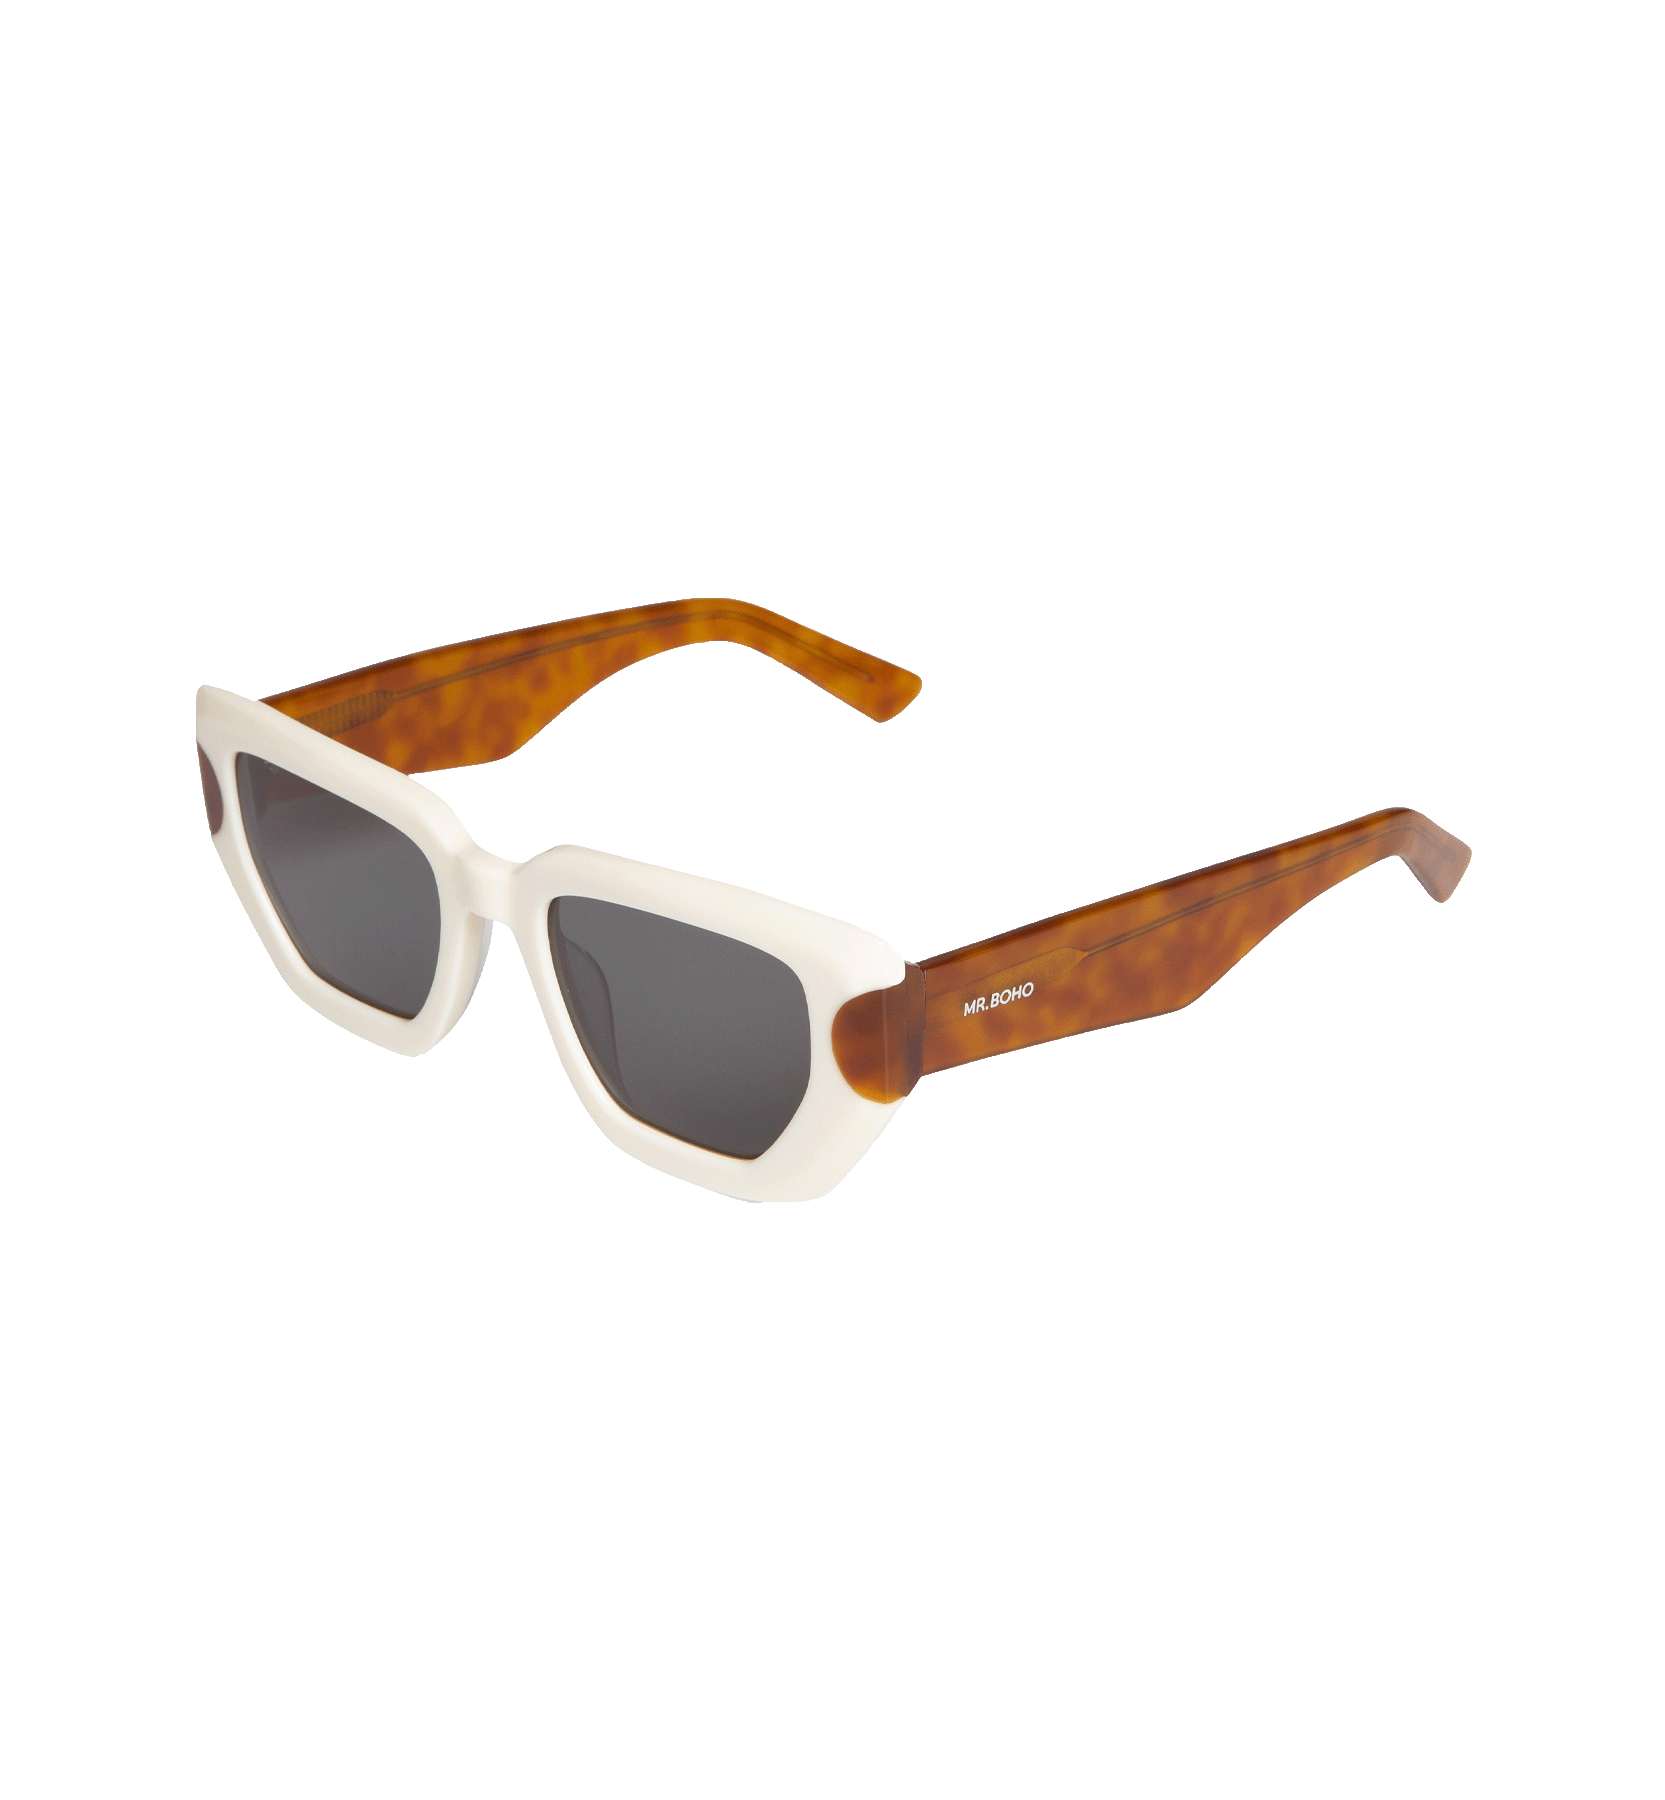 Sunglasses Dalston Cream/Leo by Mr. Boho